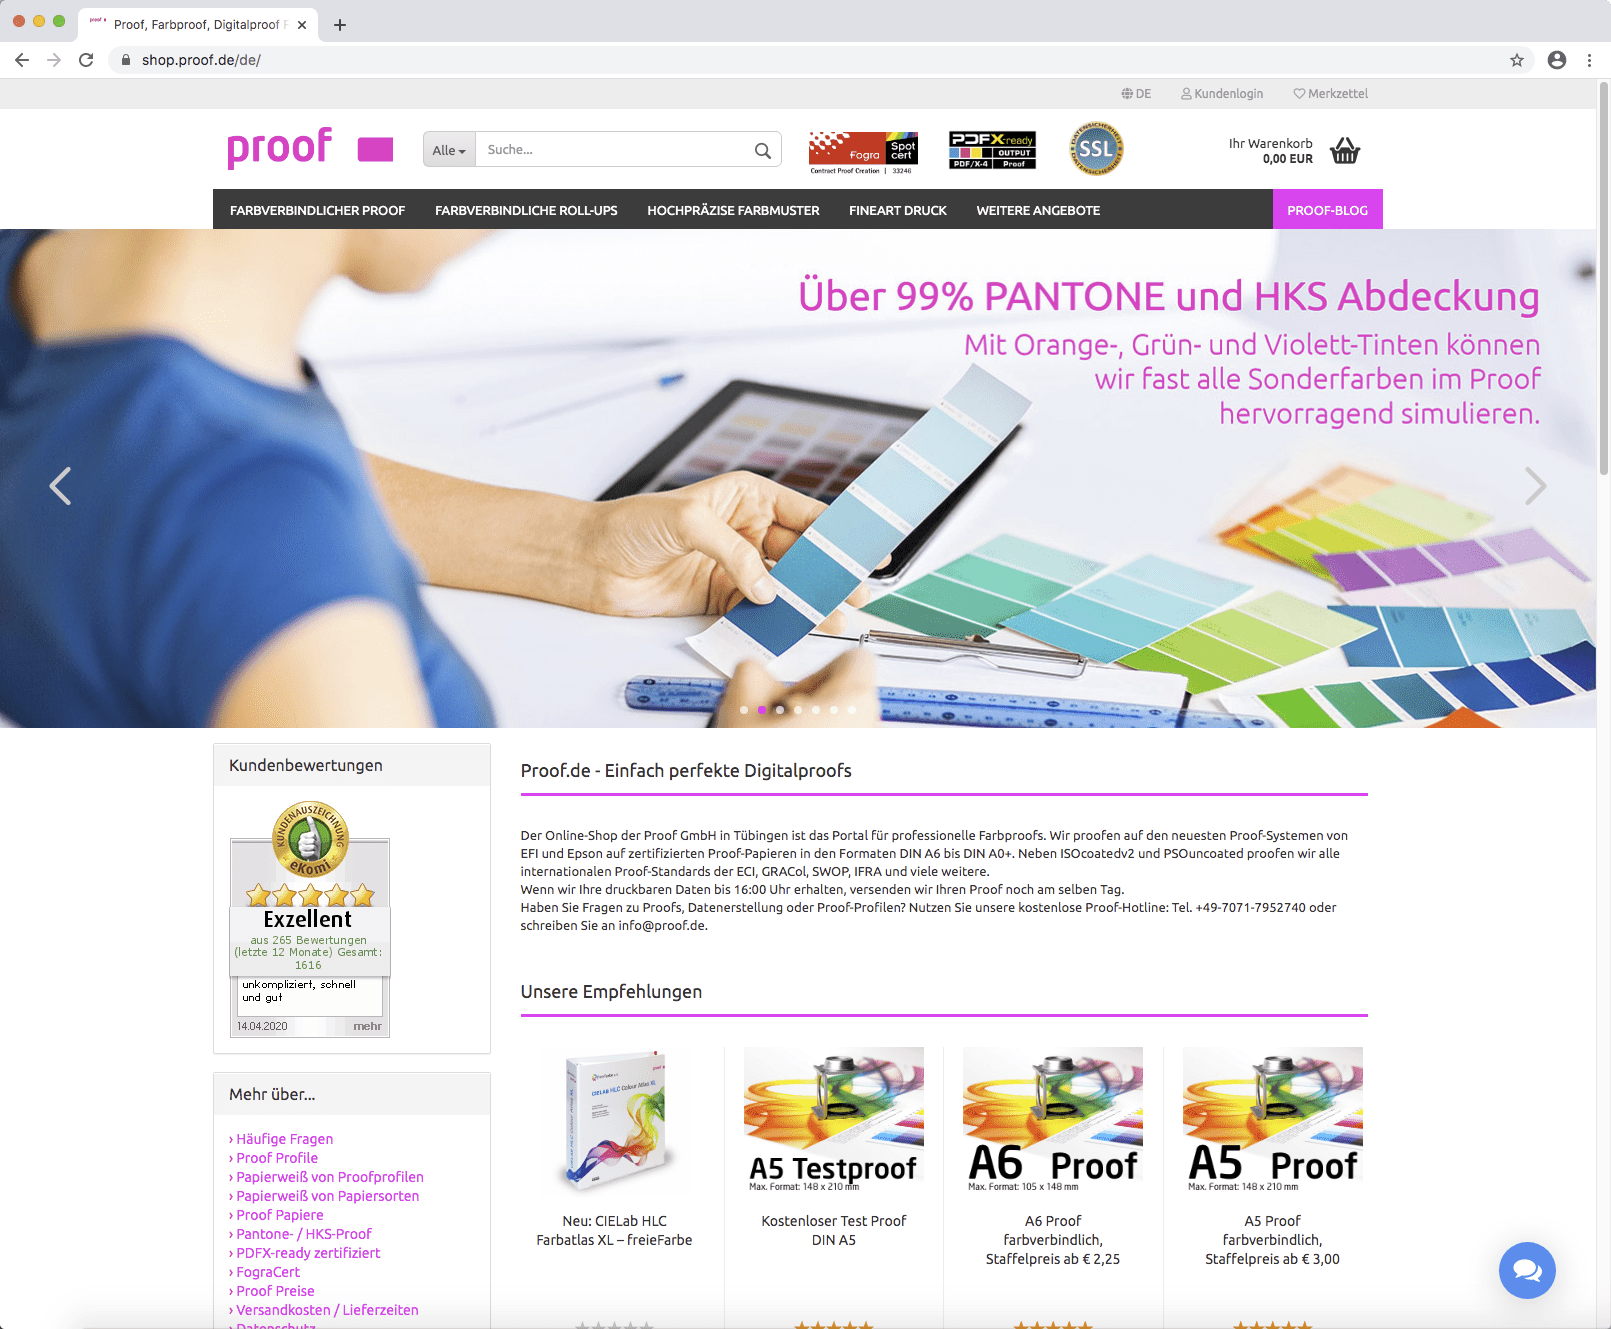 shop.proof.de's hjemmeside